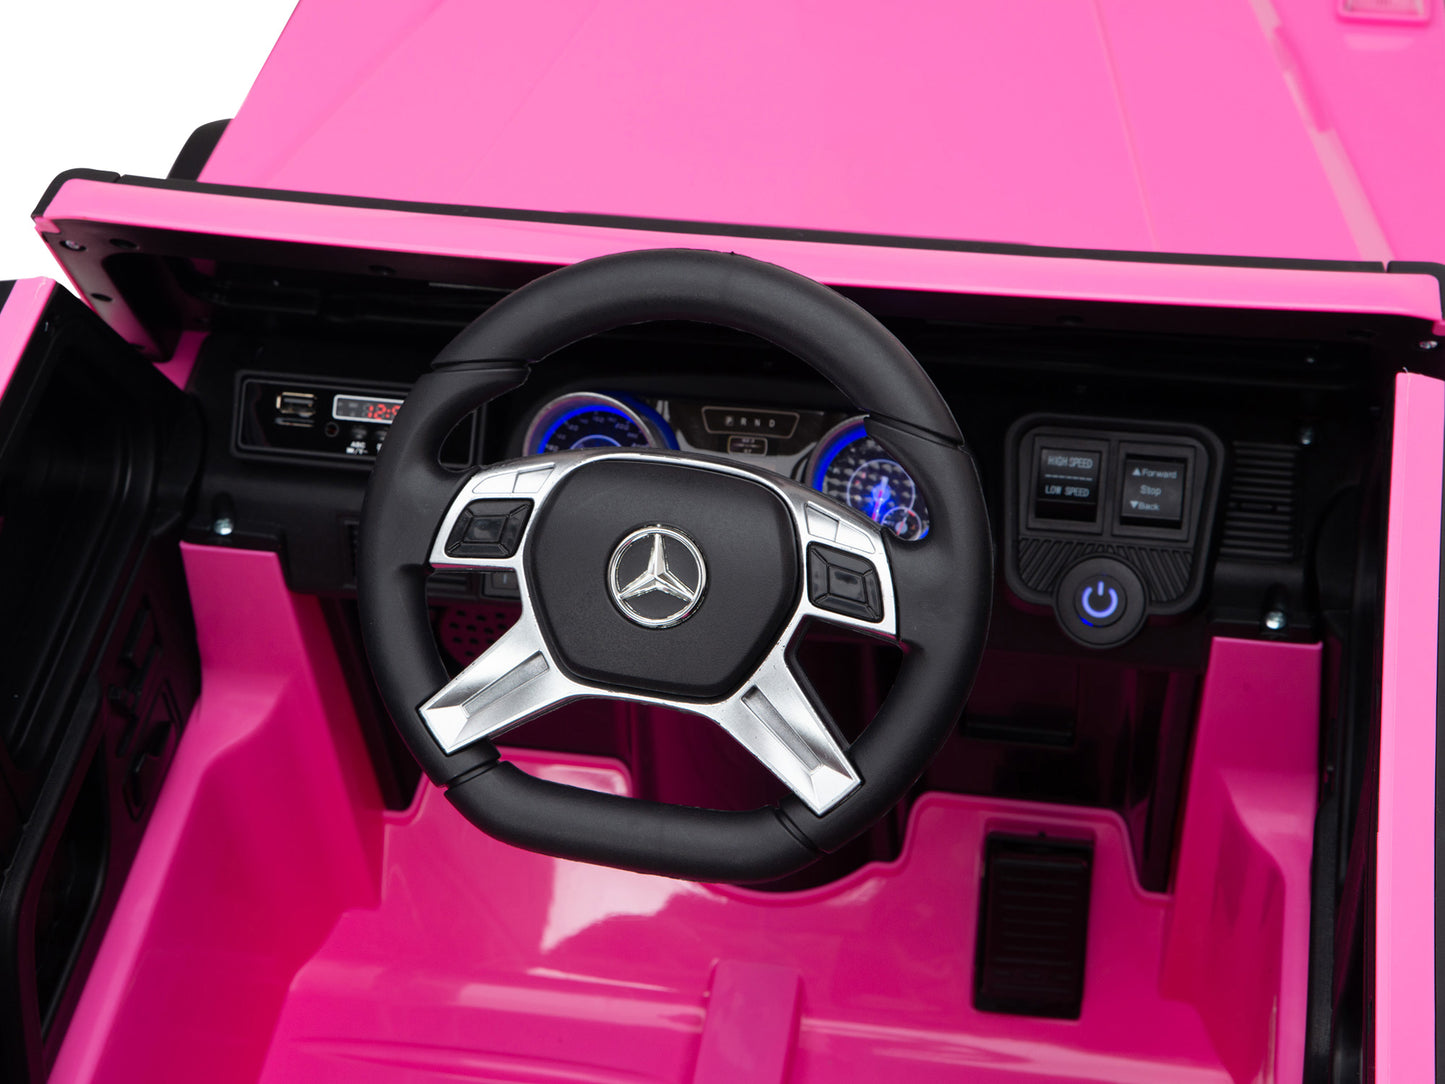 12V Mercedes-Maybach G650 Landaulet Kids Ride On Car/SUV with Remote – Pink